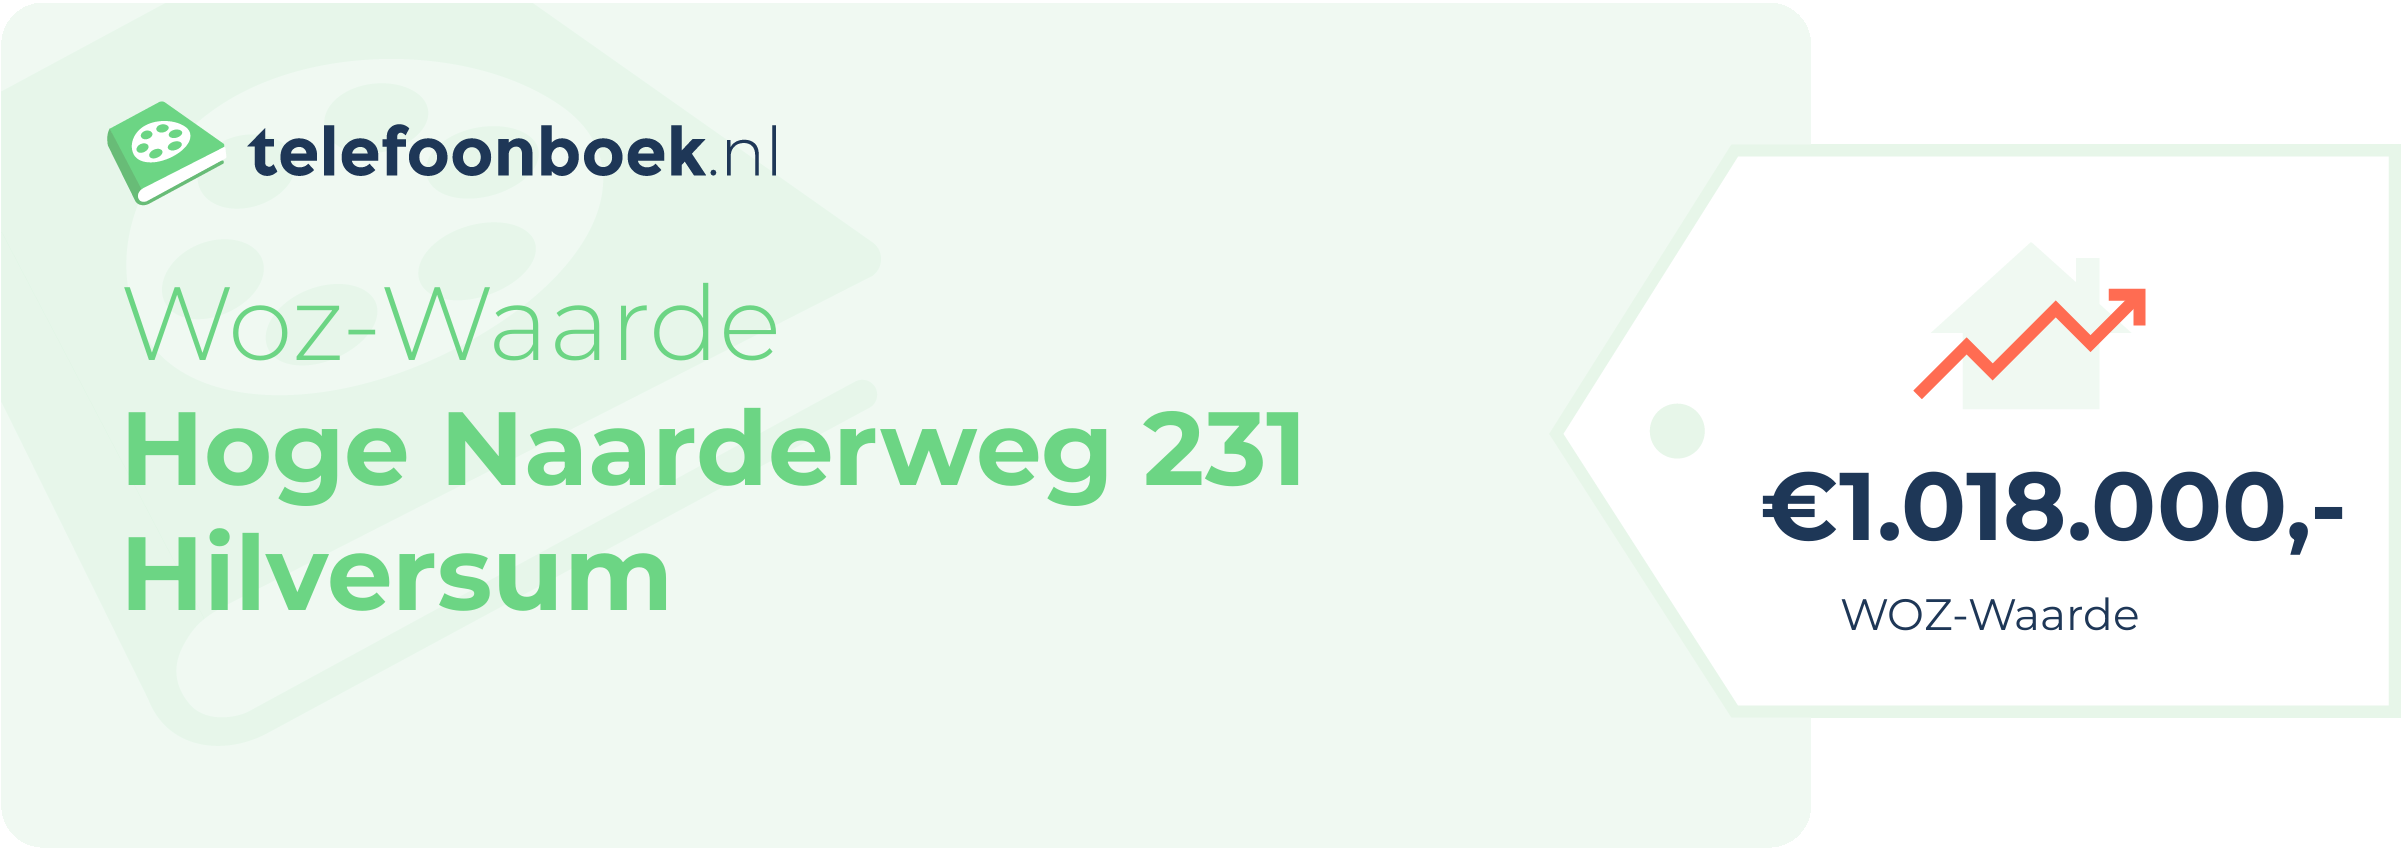 WOZ-waarde Hoge Naarderweg 231 Hilversum